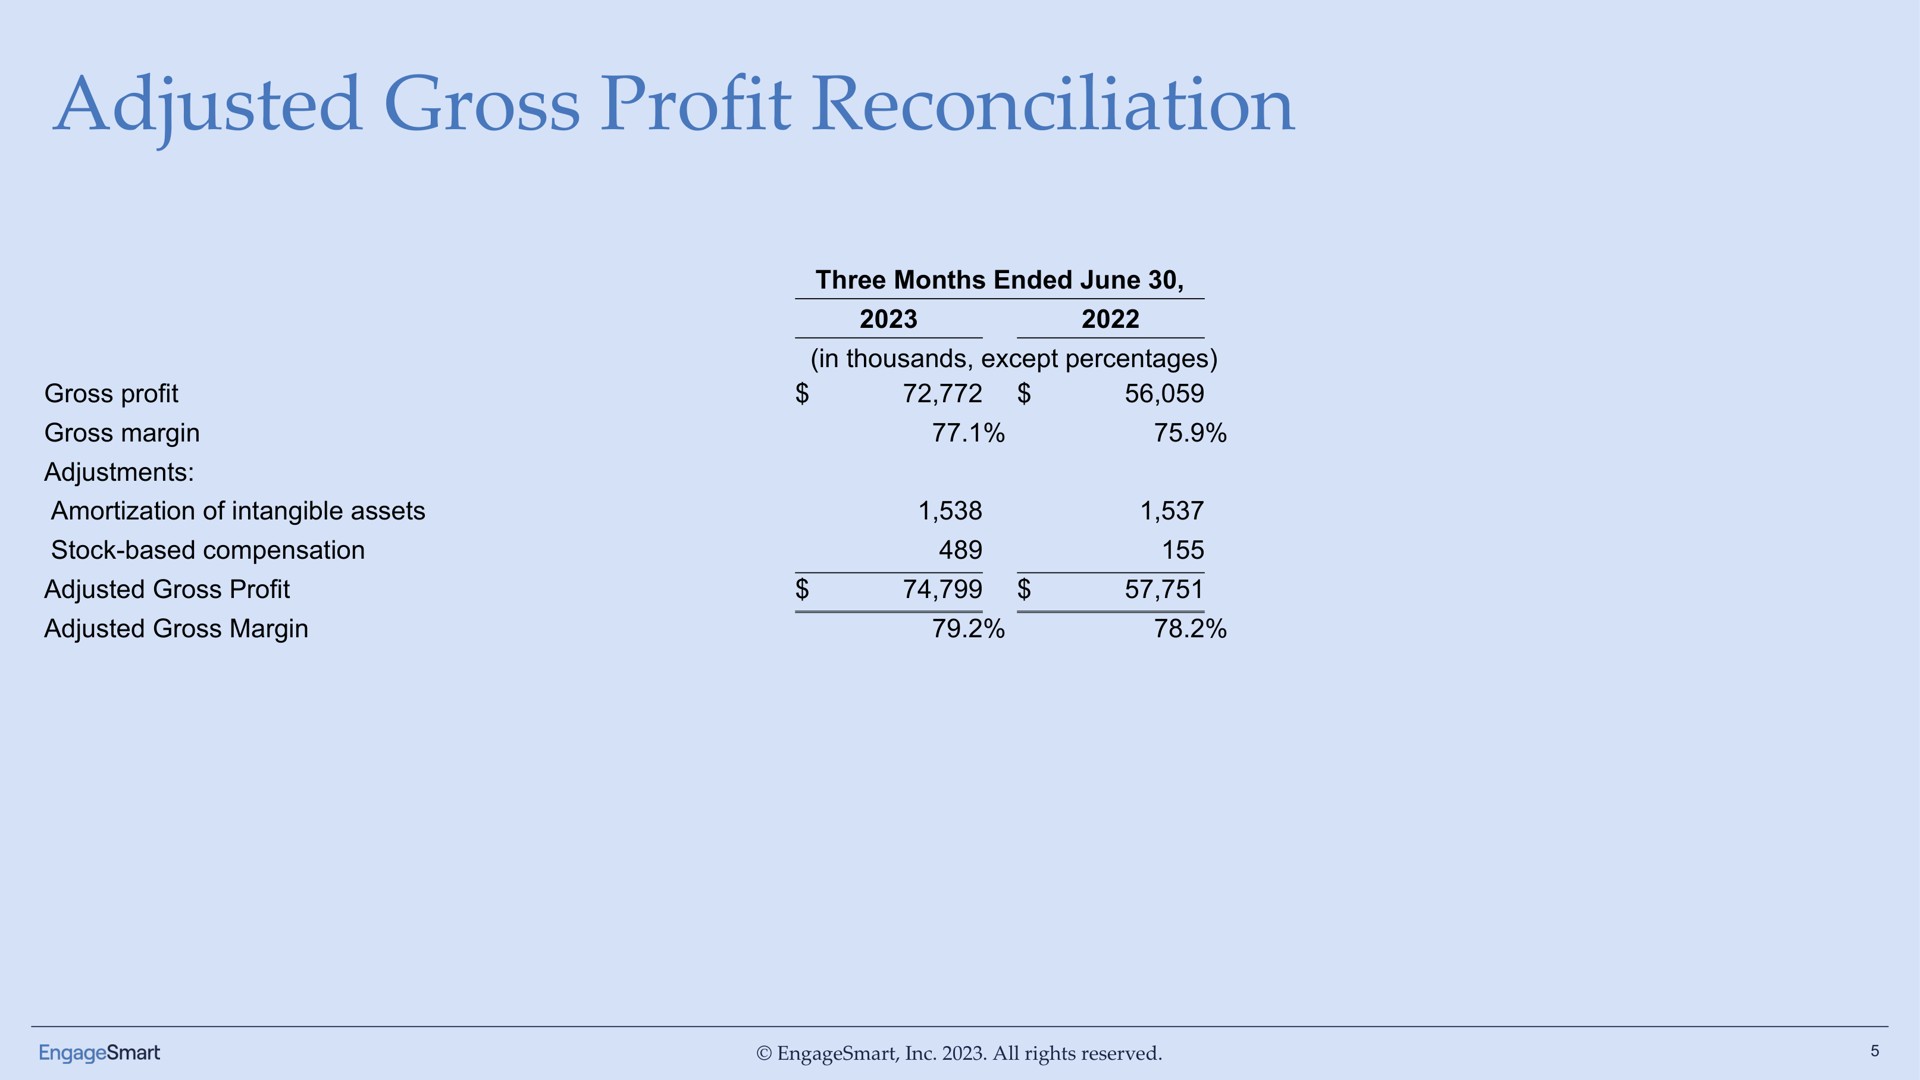 adjusted gross profit reconciliation | EngageSmart